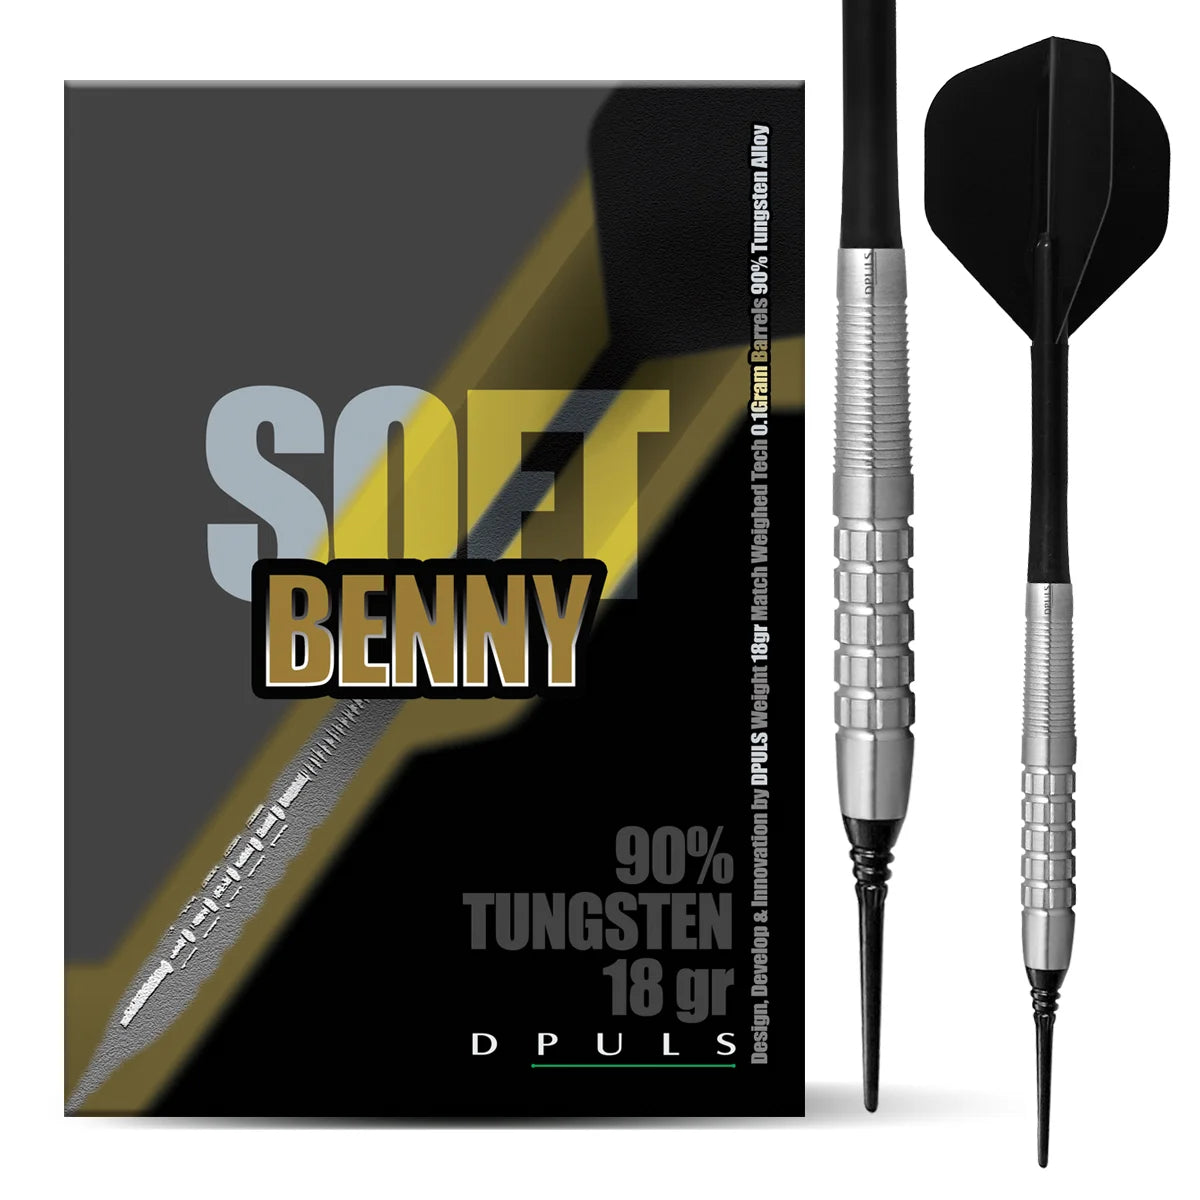 DPULS Benny Soft Darts 20g/90%